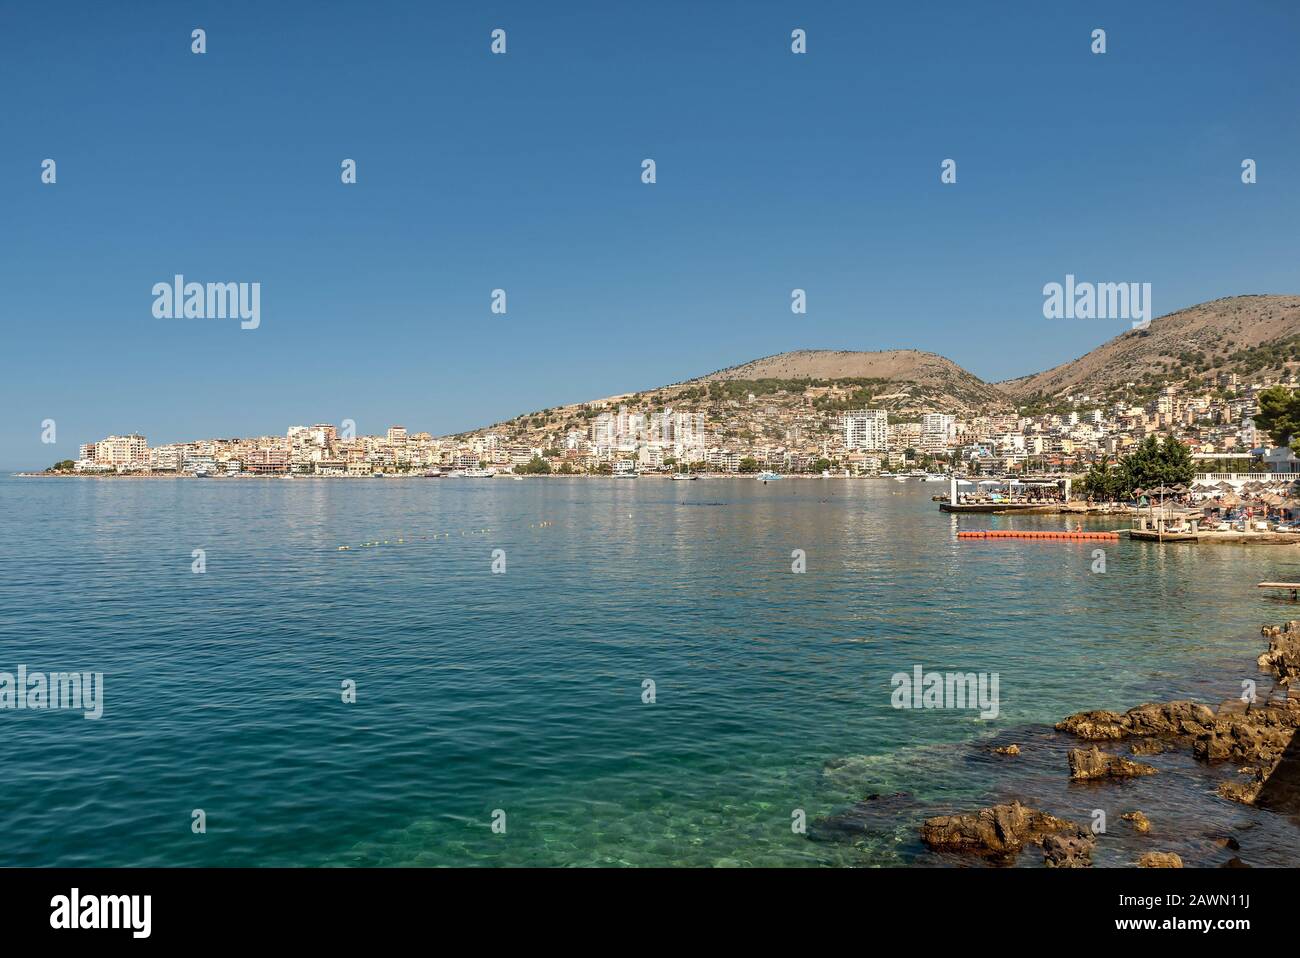 View of Saranda city on the coast of Ionian sea, Albania Stock Photo